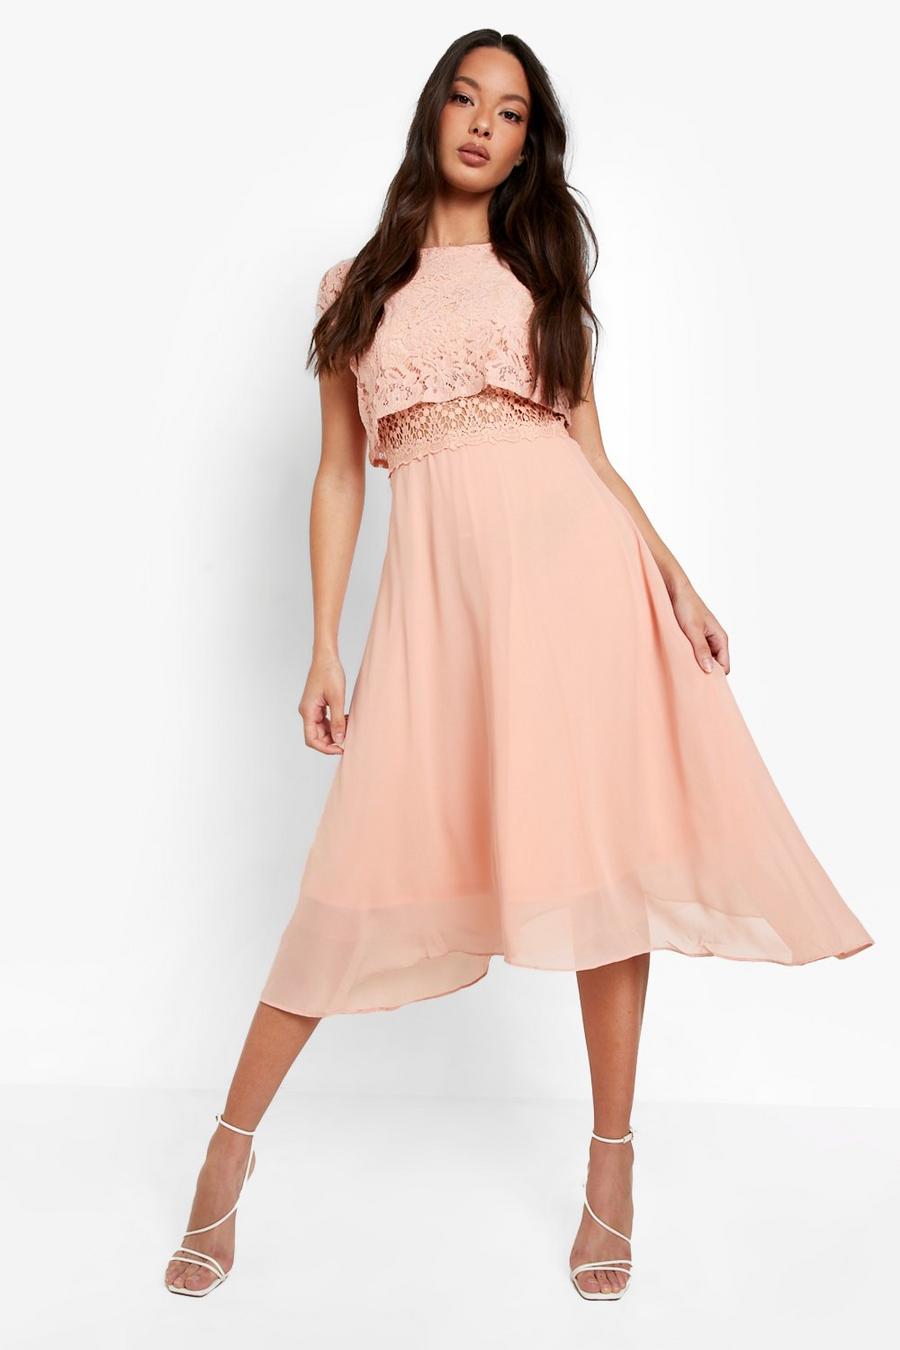 Blush rosa Lace Top Chiffon Skater Dress